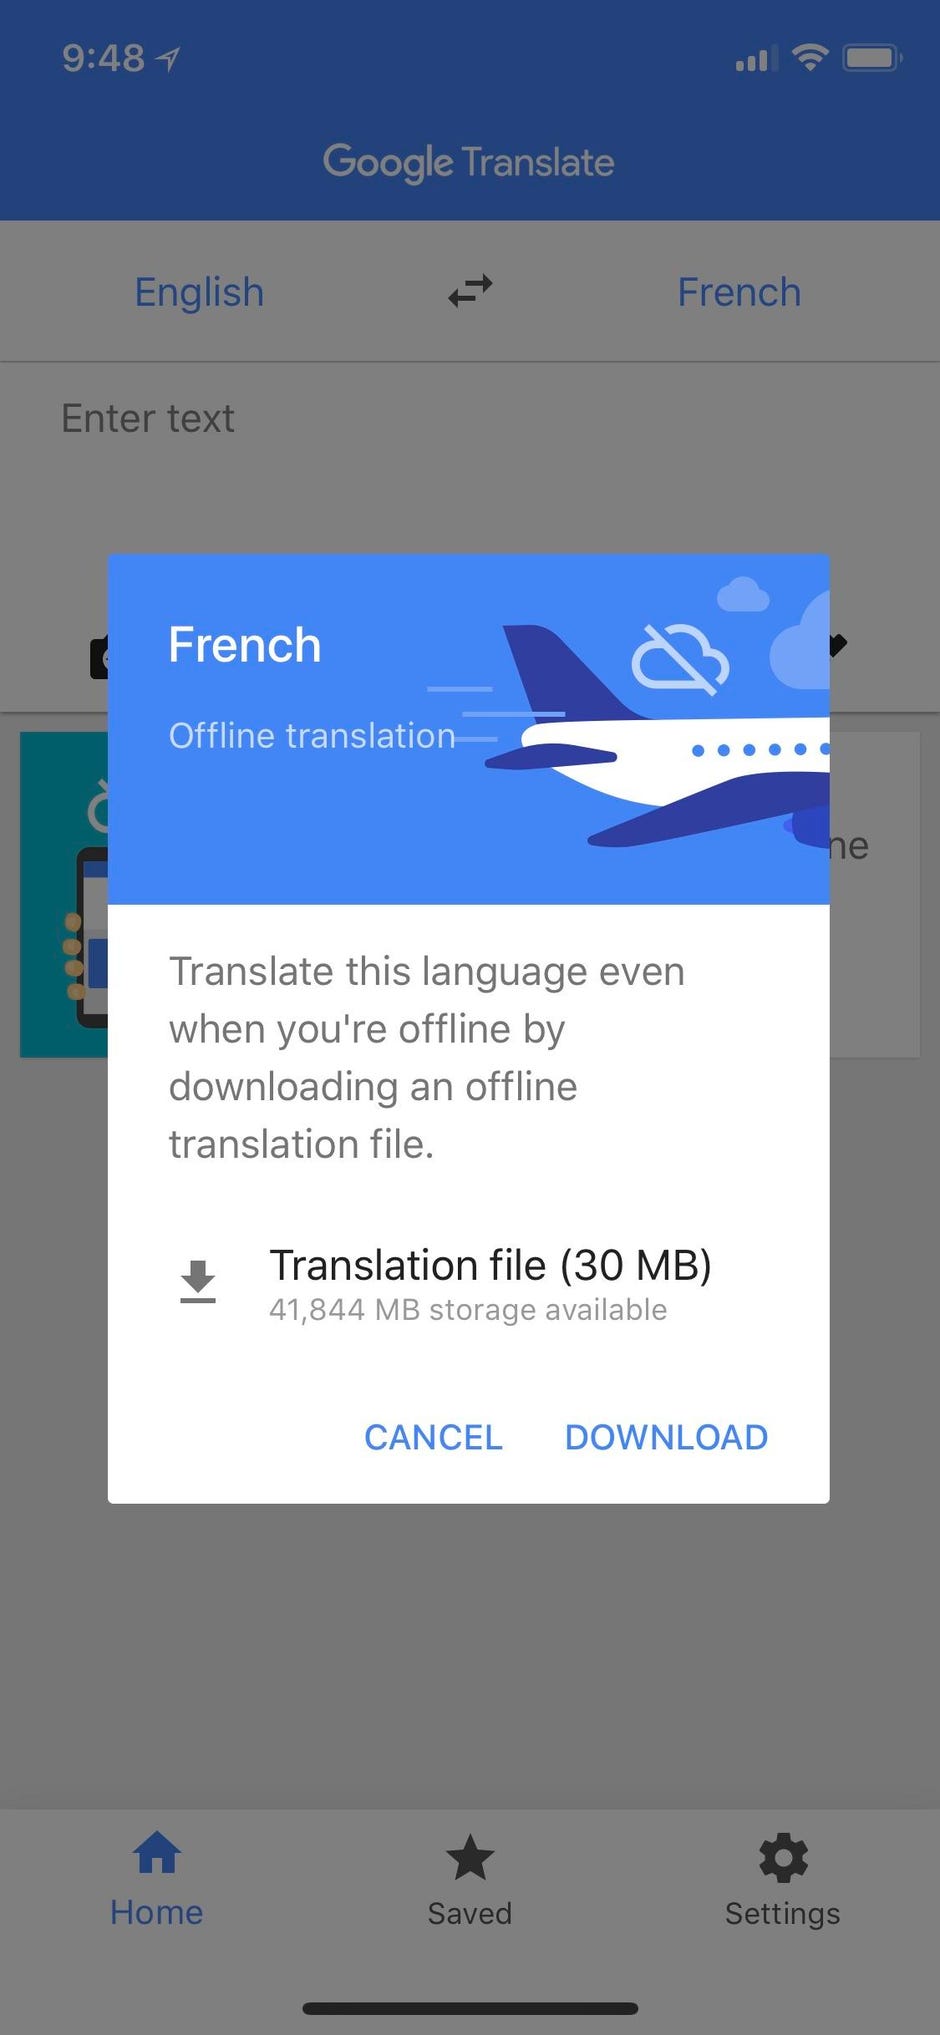 5 google translate tips and tricks you